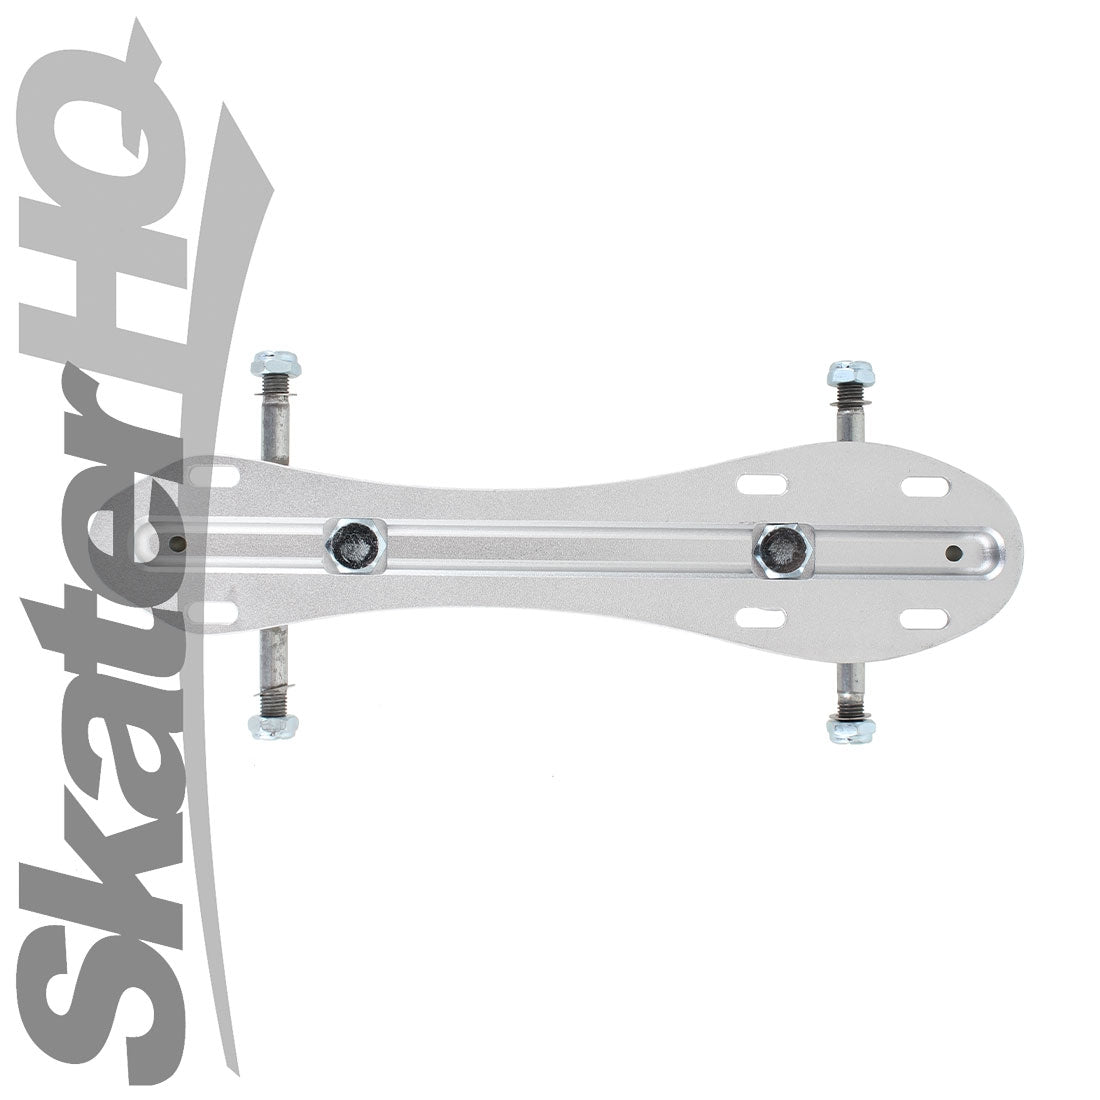 BONT Tracer Speed Plates 6.5 - Silver Roller Skate Plates